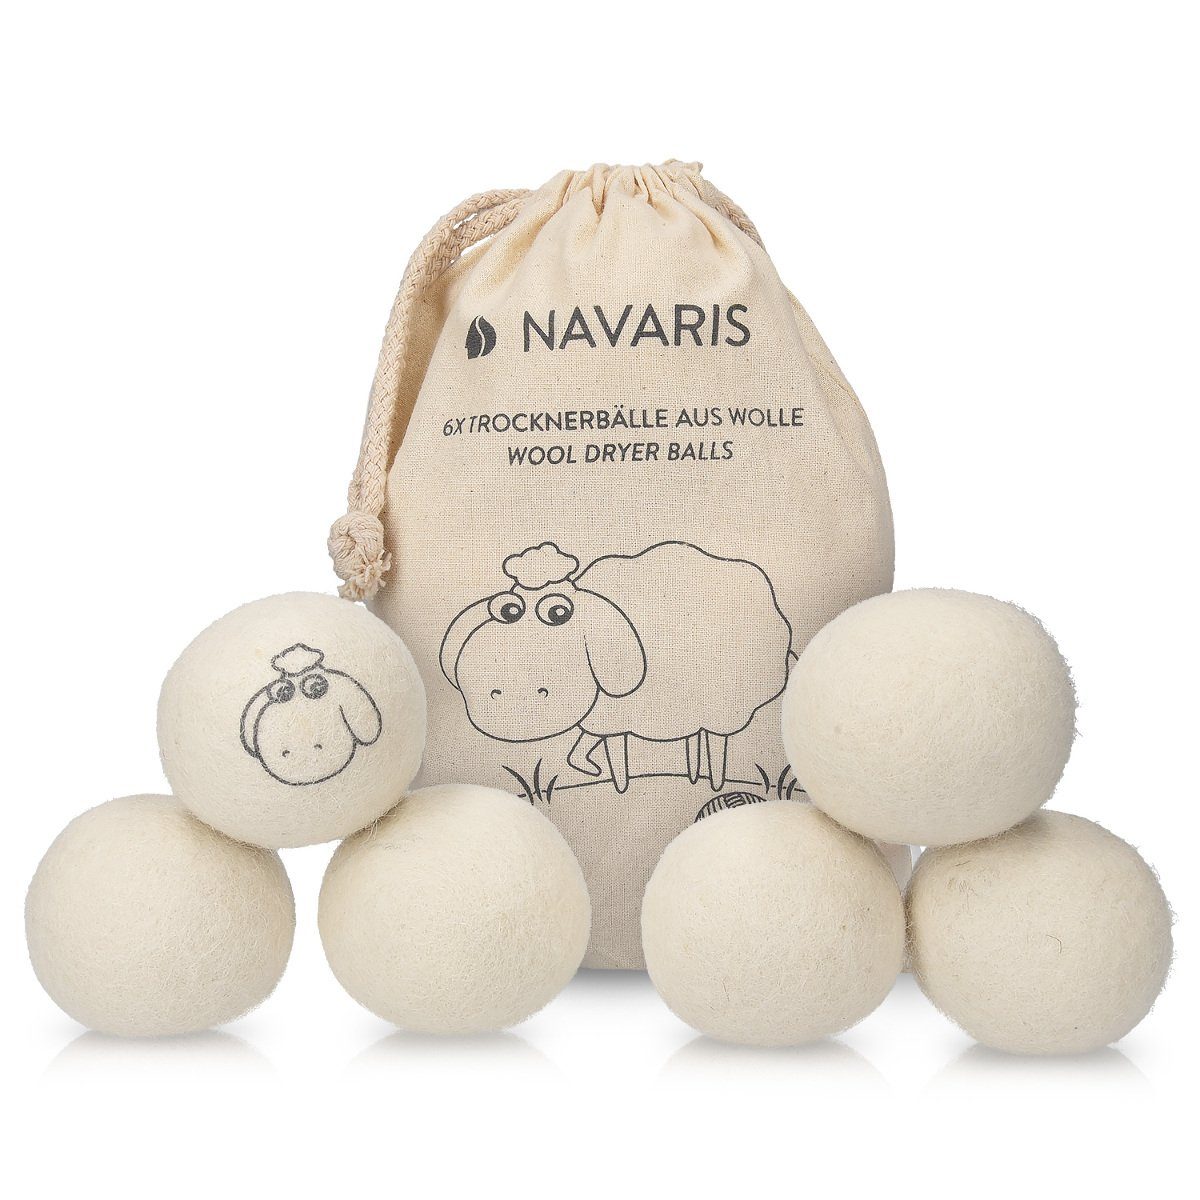 Navaris Trocknerball Trocknerbälle 6er Pack aus 100% Wolle - umweltschonend